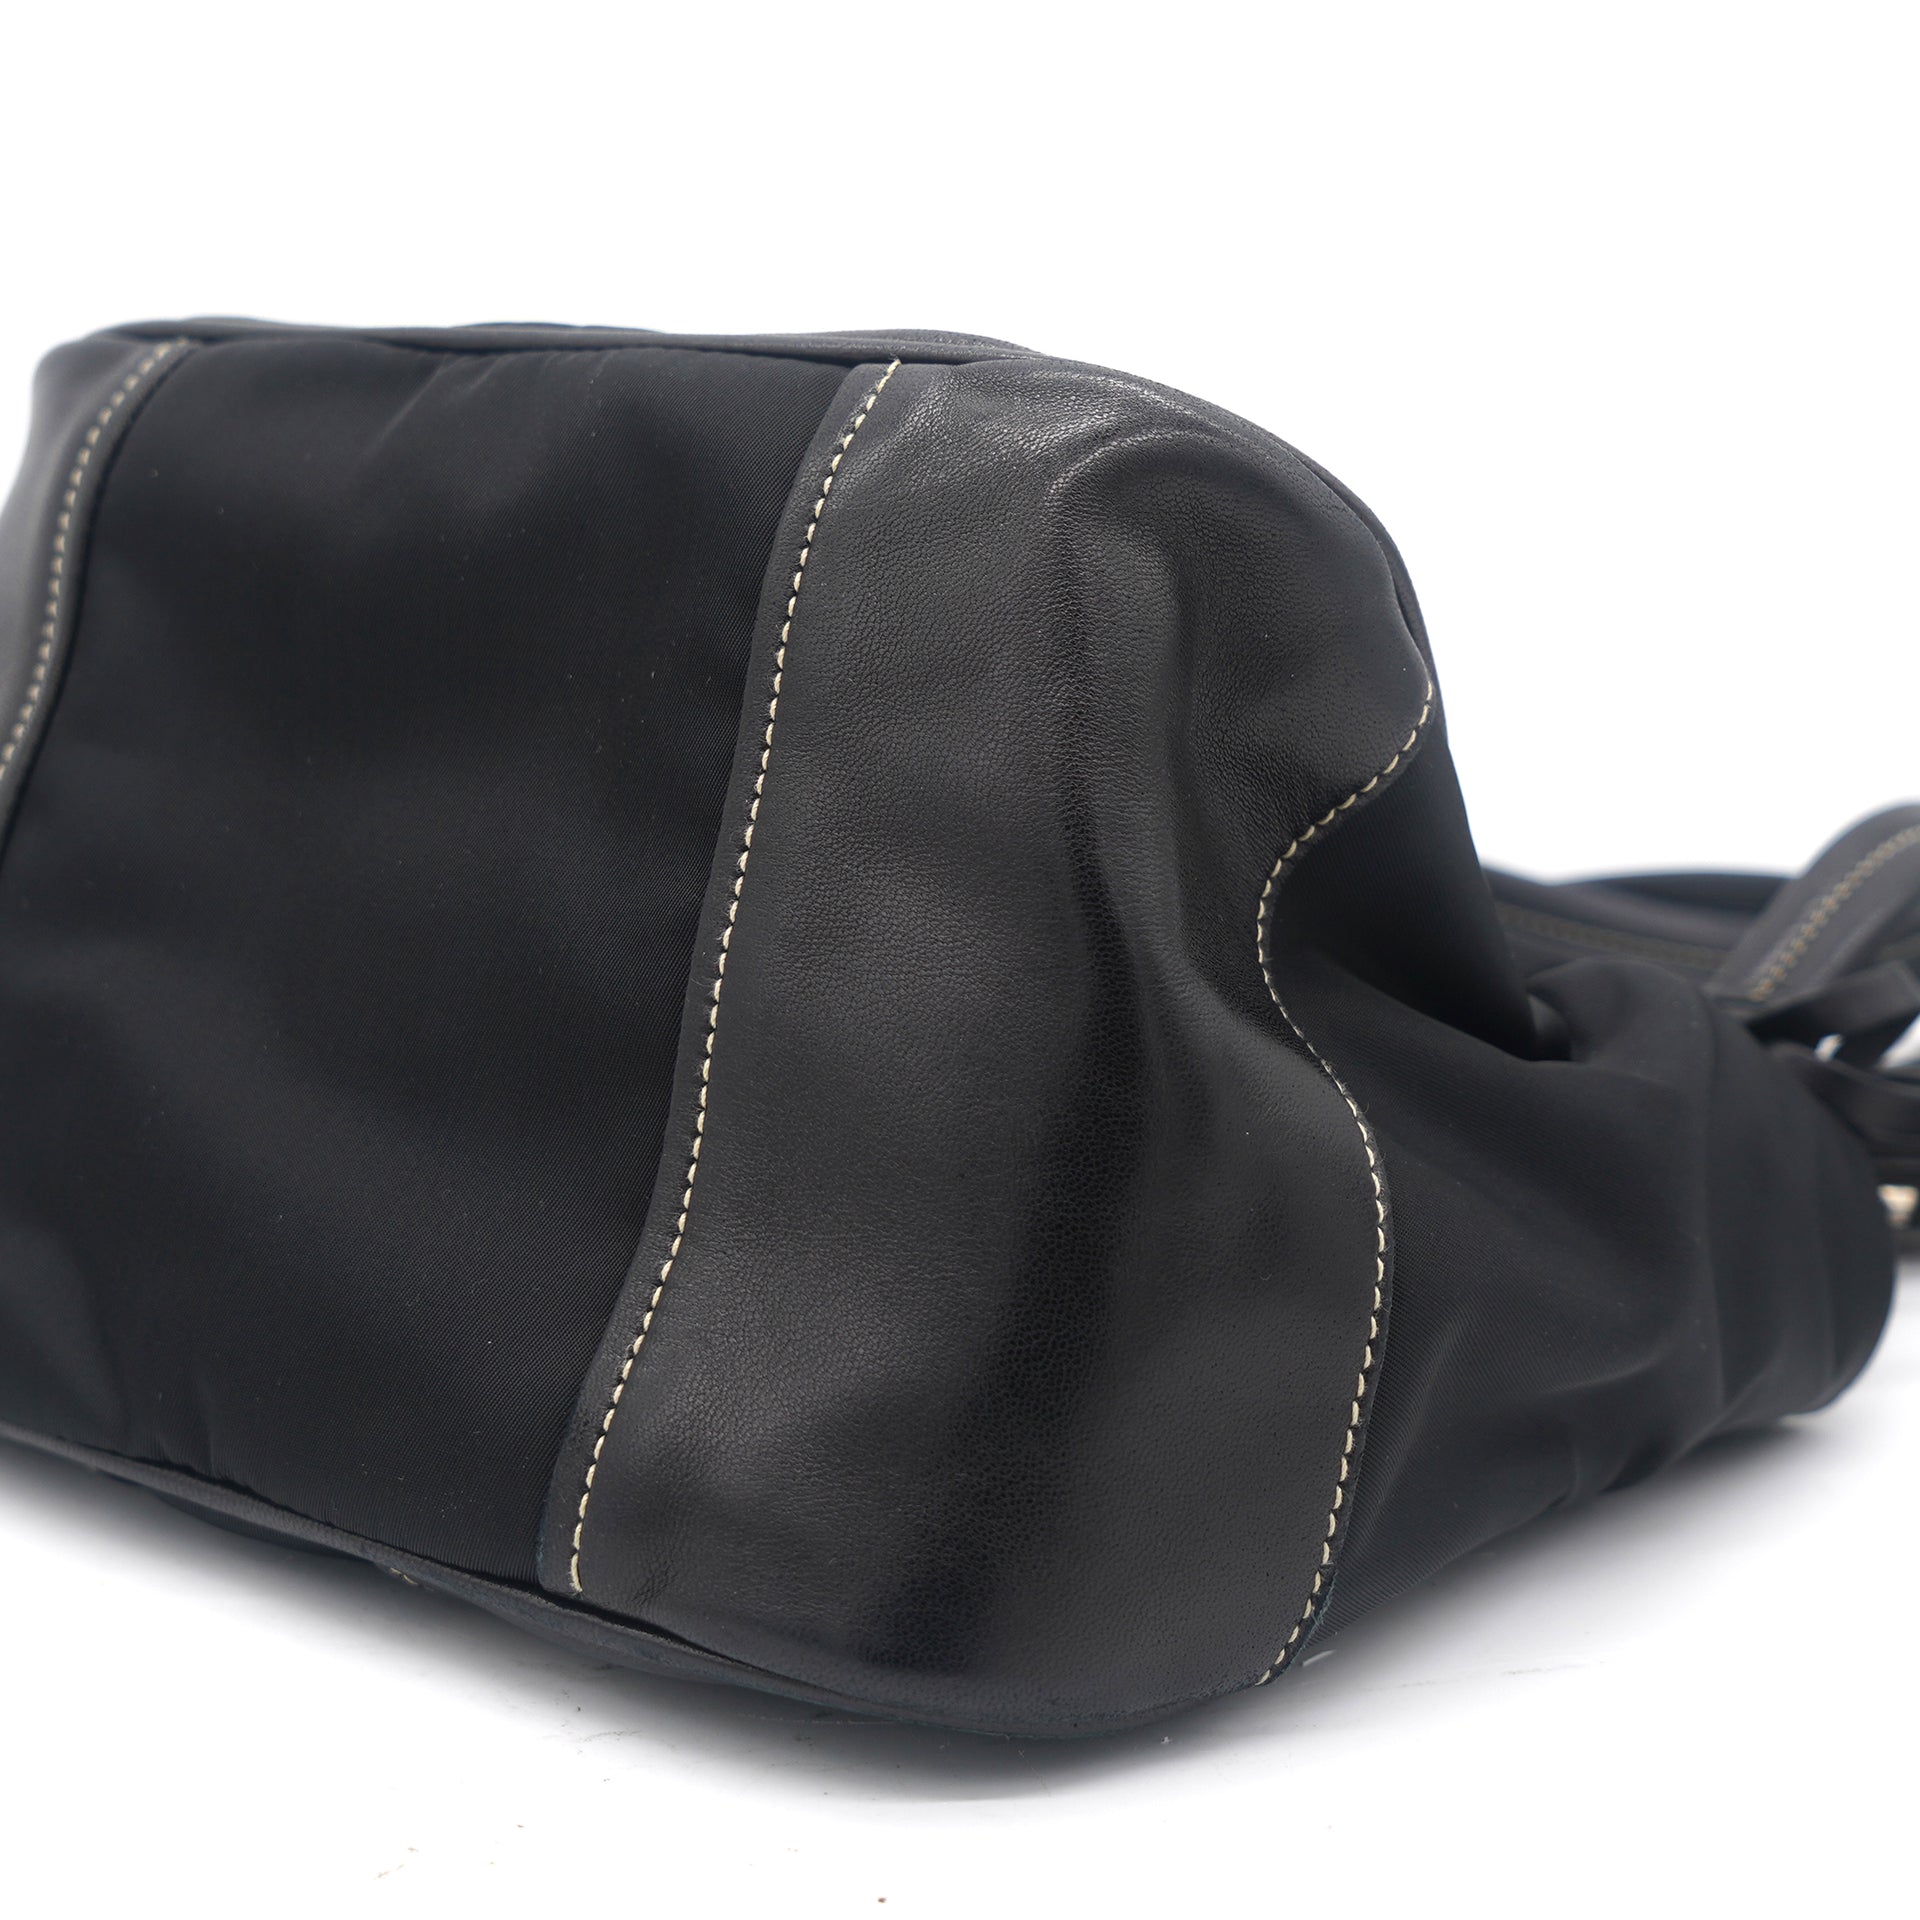 Black Leather and Nylon Mini Bag